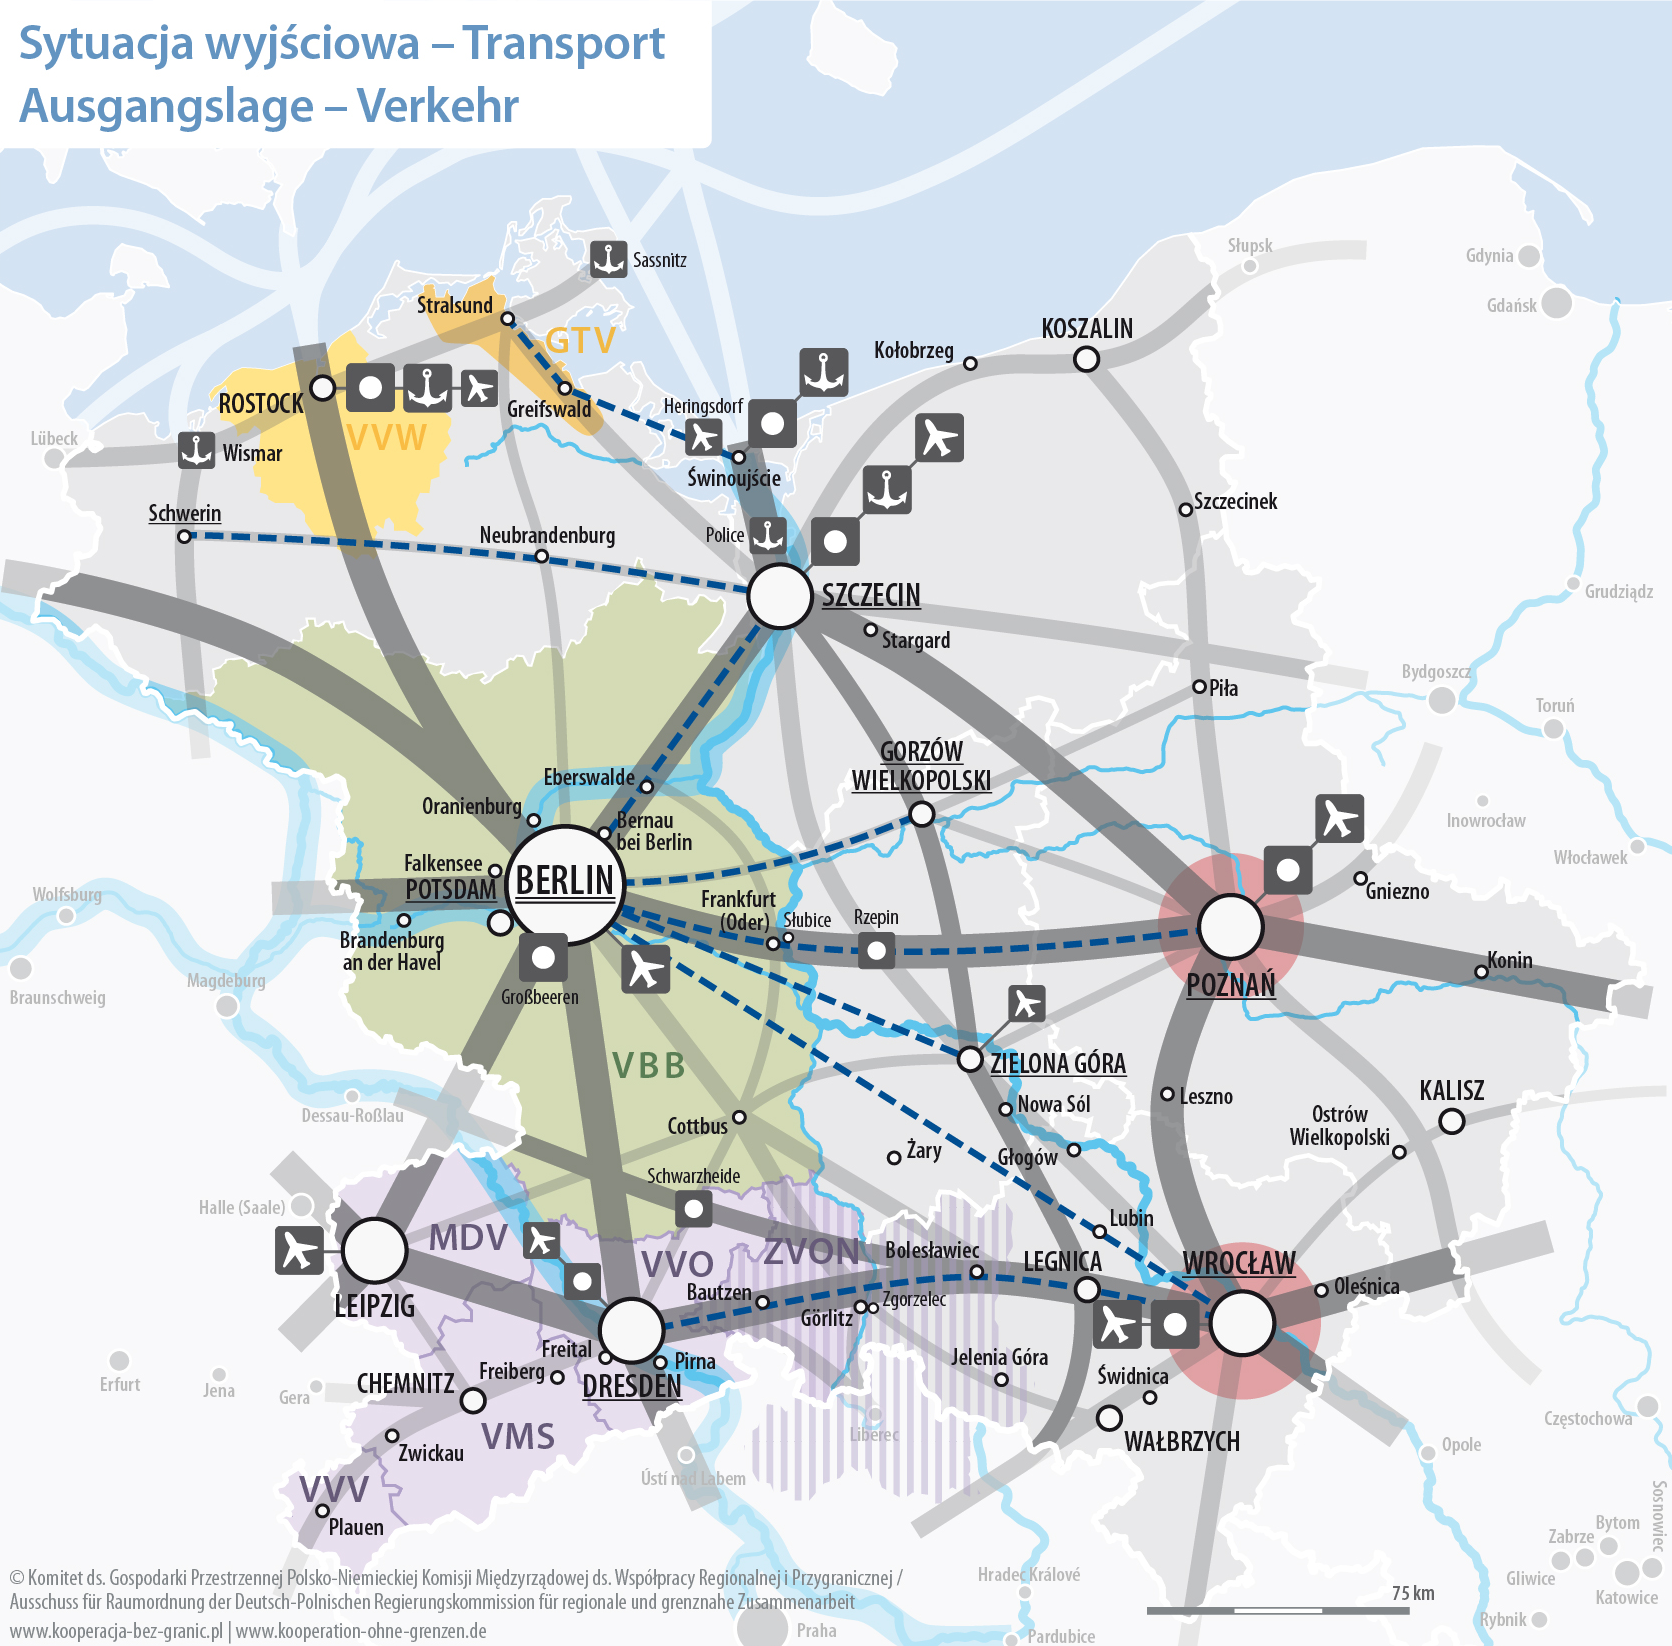 Gemeinsames Zukunftskonzept 2030 - Karte "Ausgangslage - Verkehr" / "Sytuacja wyjściowa - Transport", © BMI/MFiPR